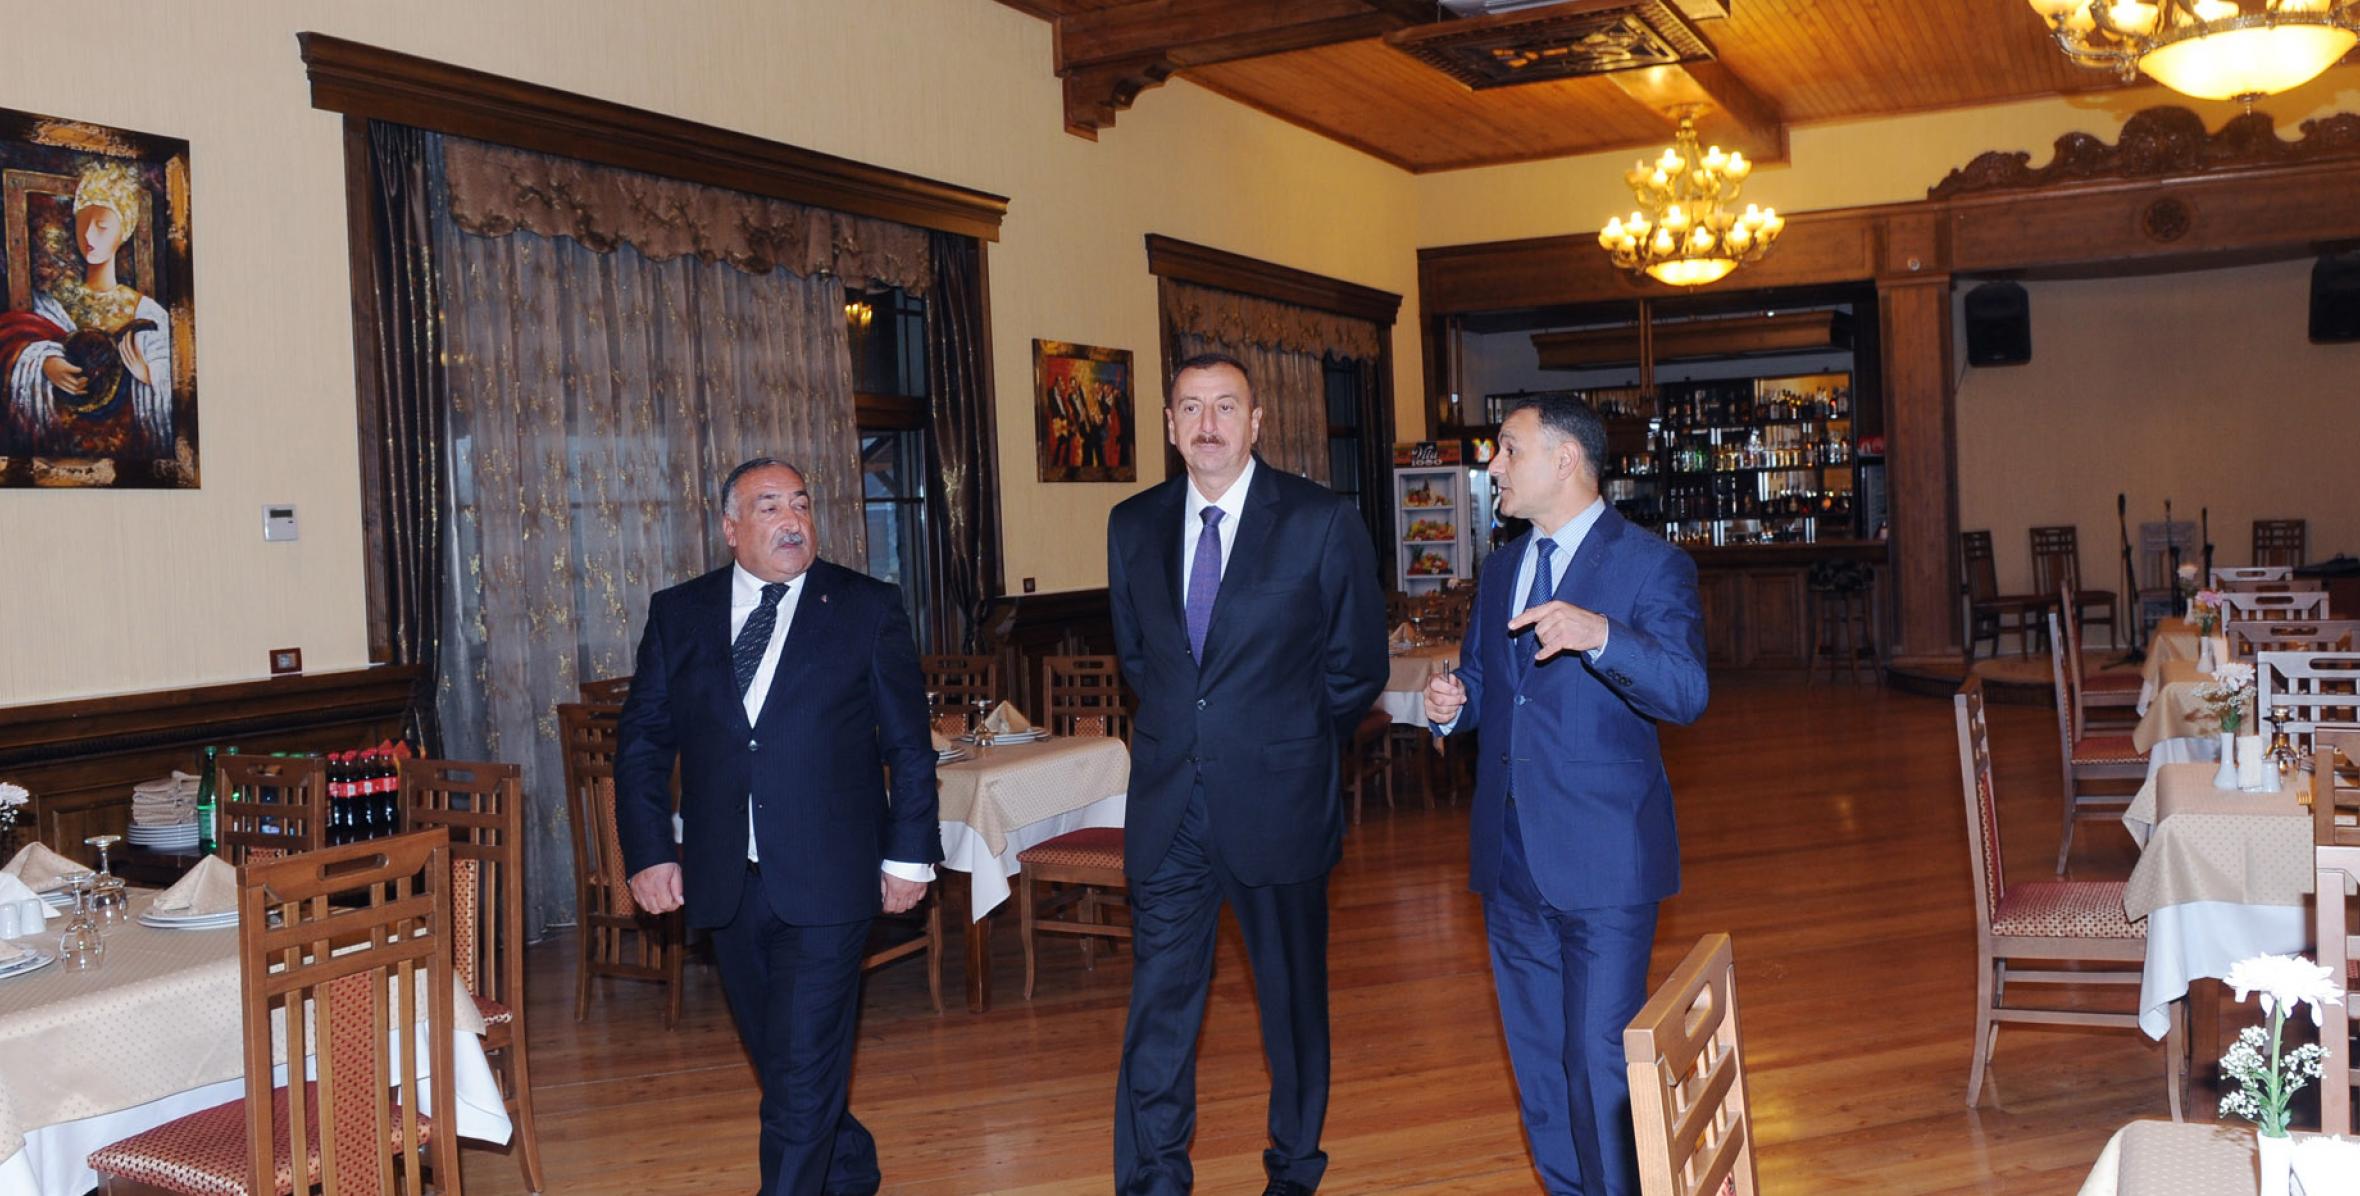 Ilham Aliyev reviewed the Sharadil recreation center in Shamakhi